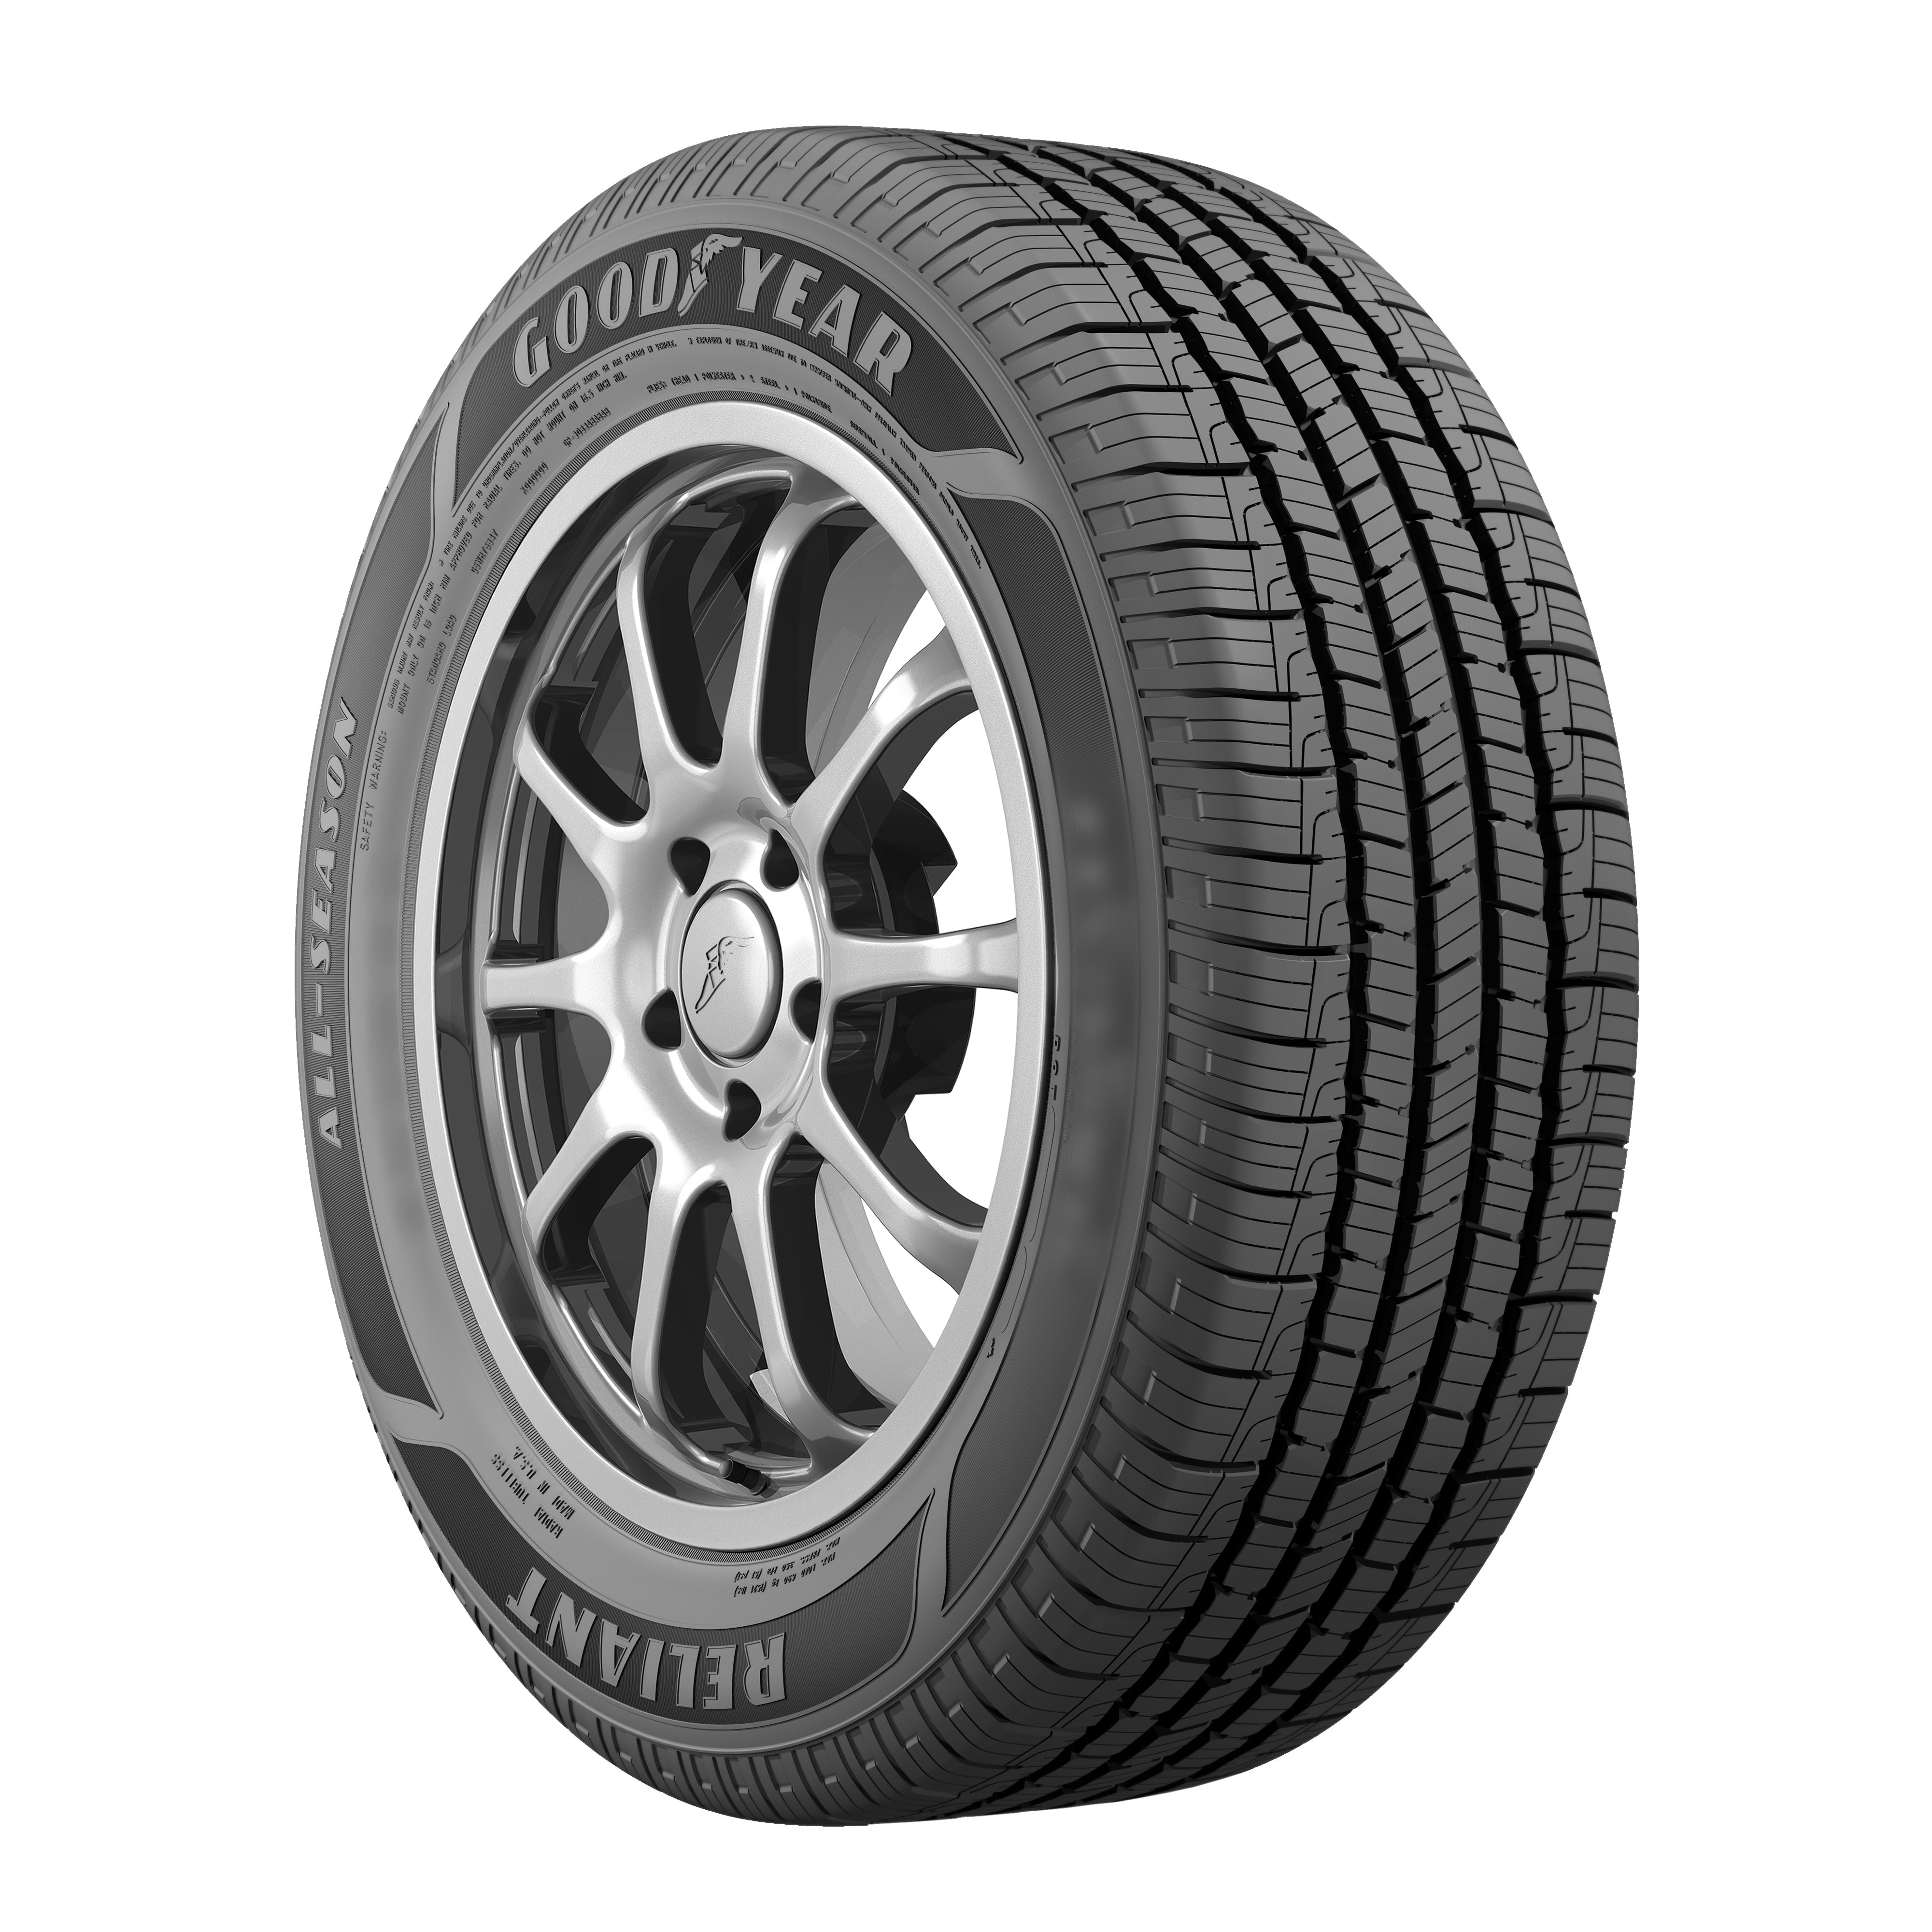 Goodyear Reliant All-Season 205/65R15 94H All-Season Tire